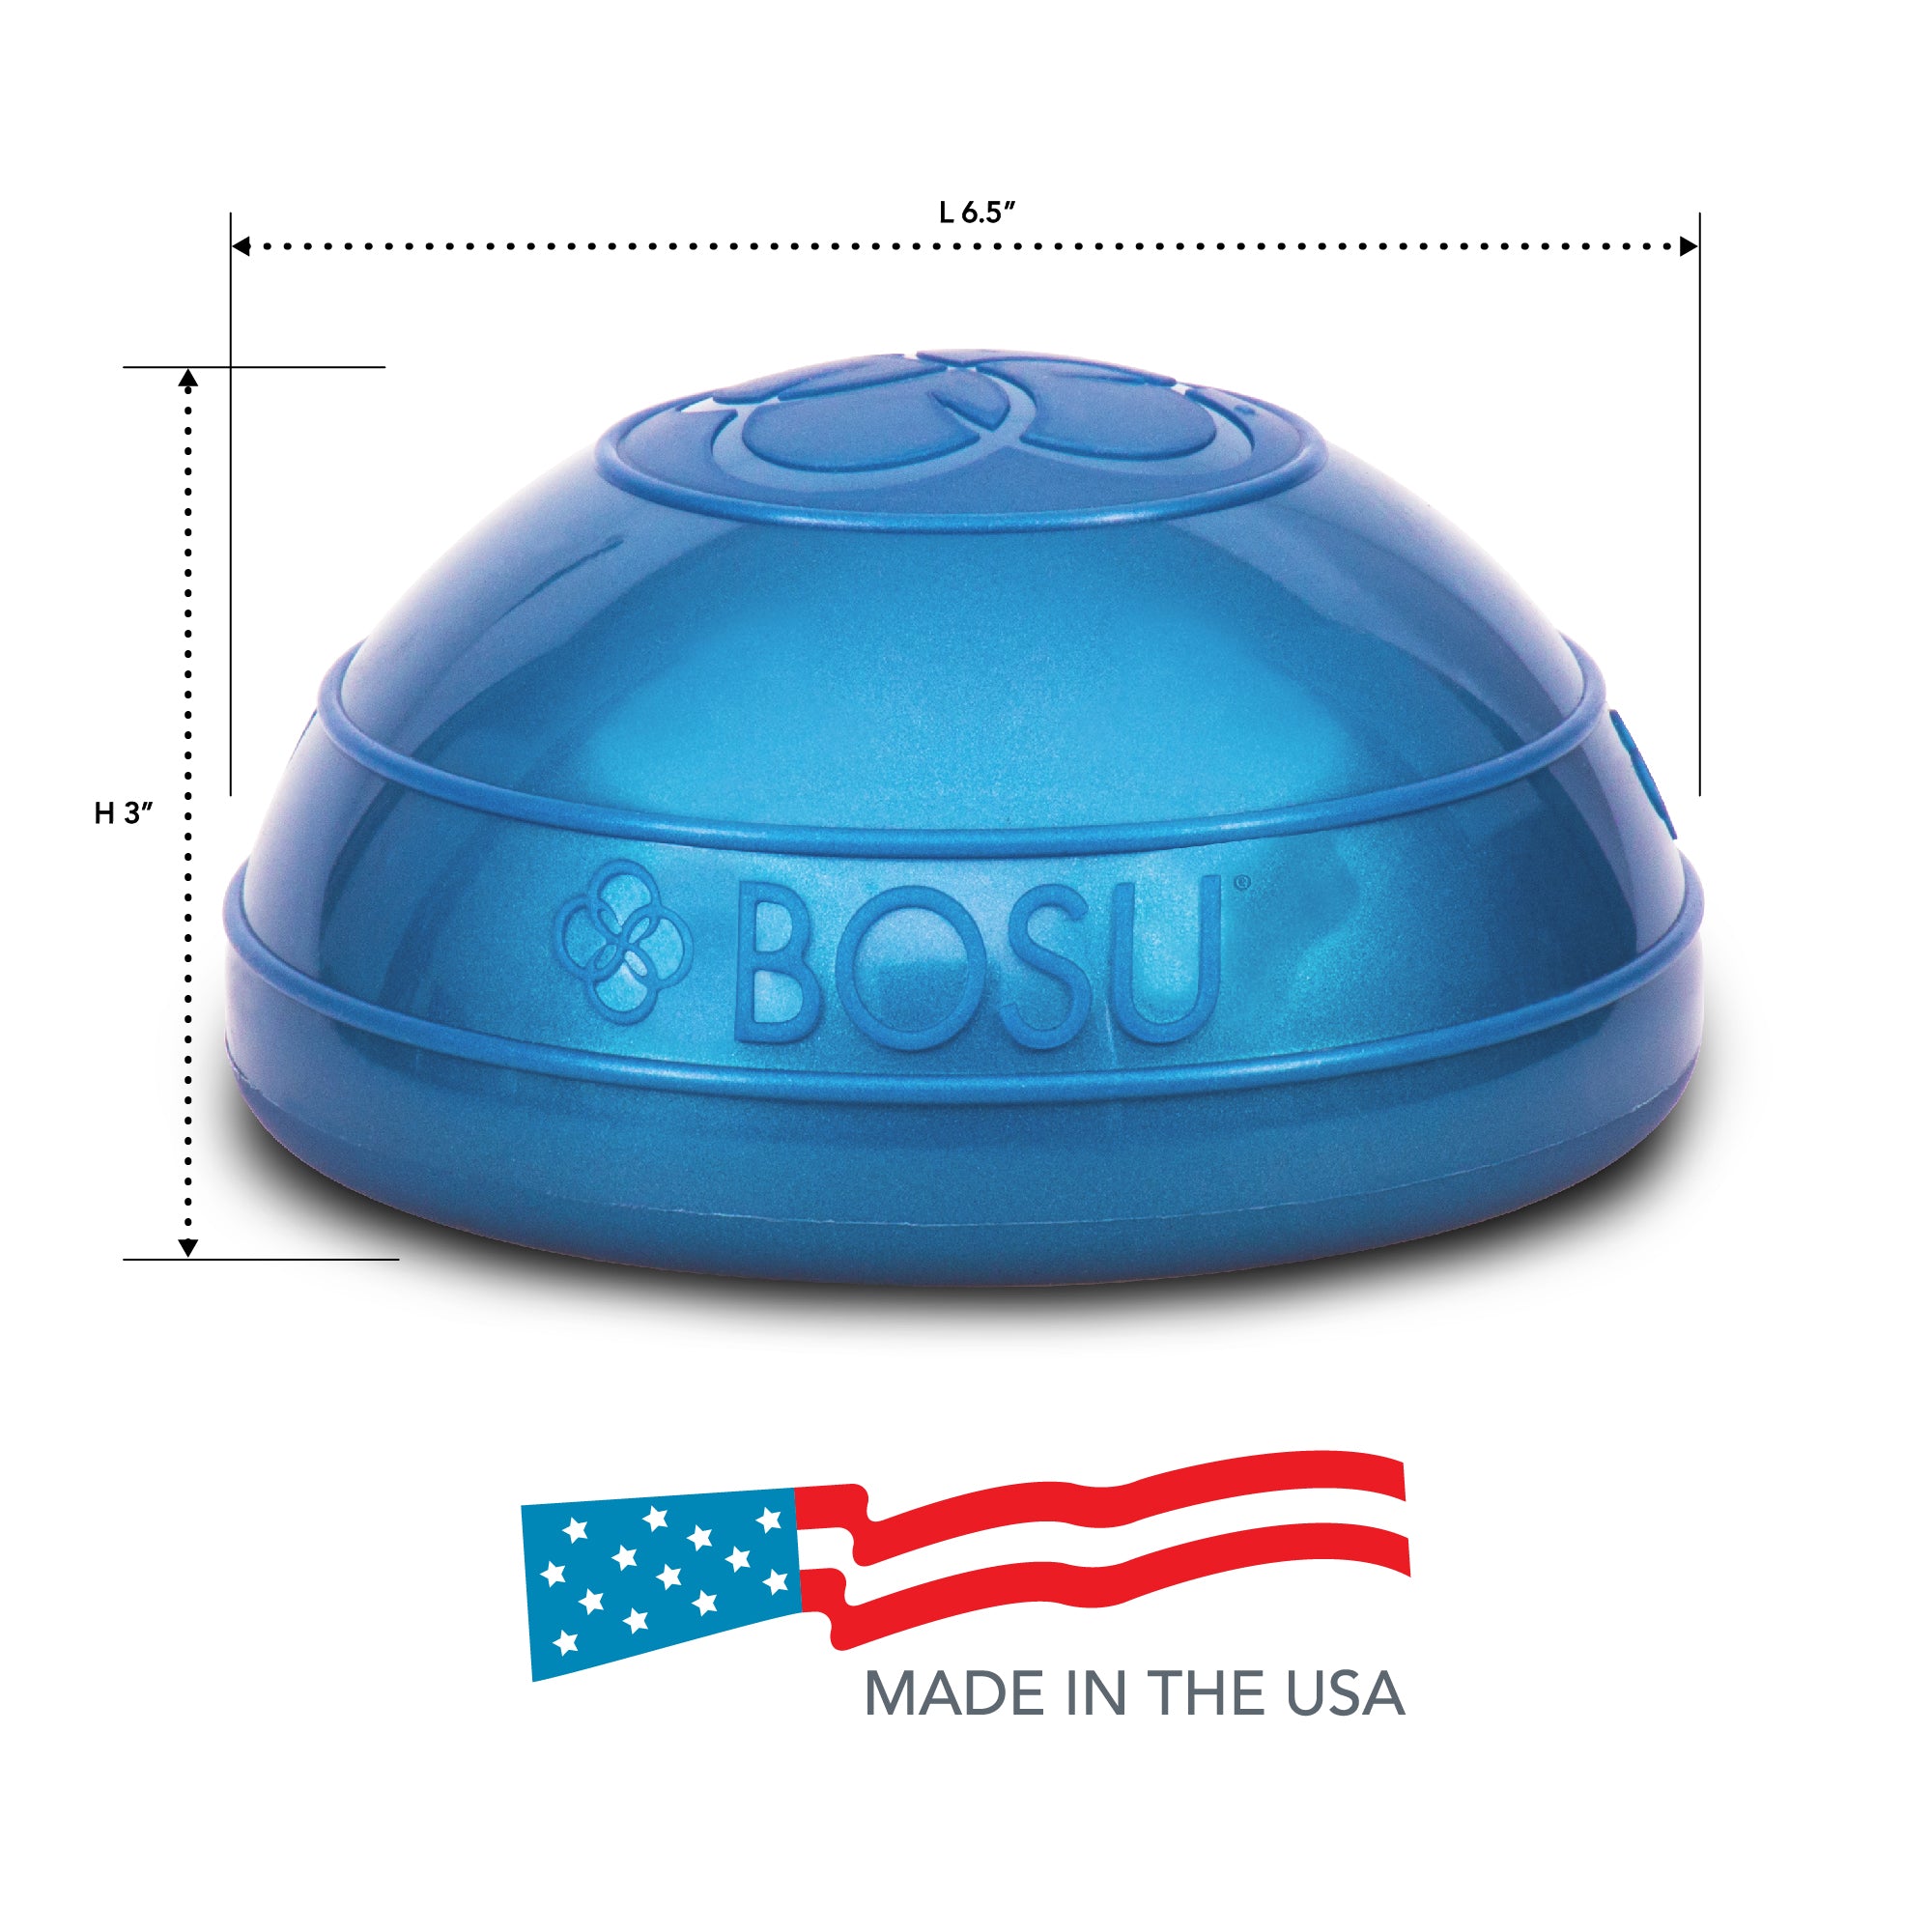 BOSU® Balance Pods(6.5 in) - 4 pack